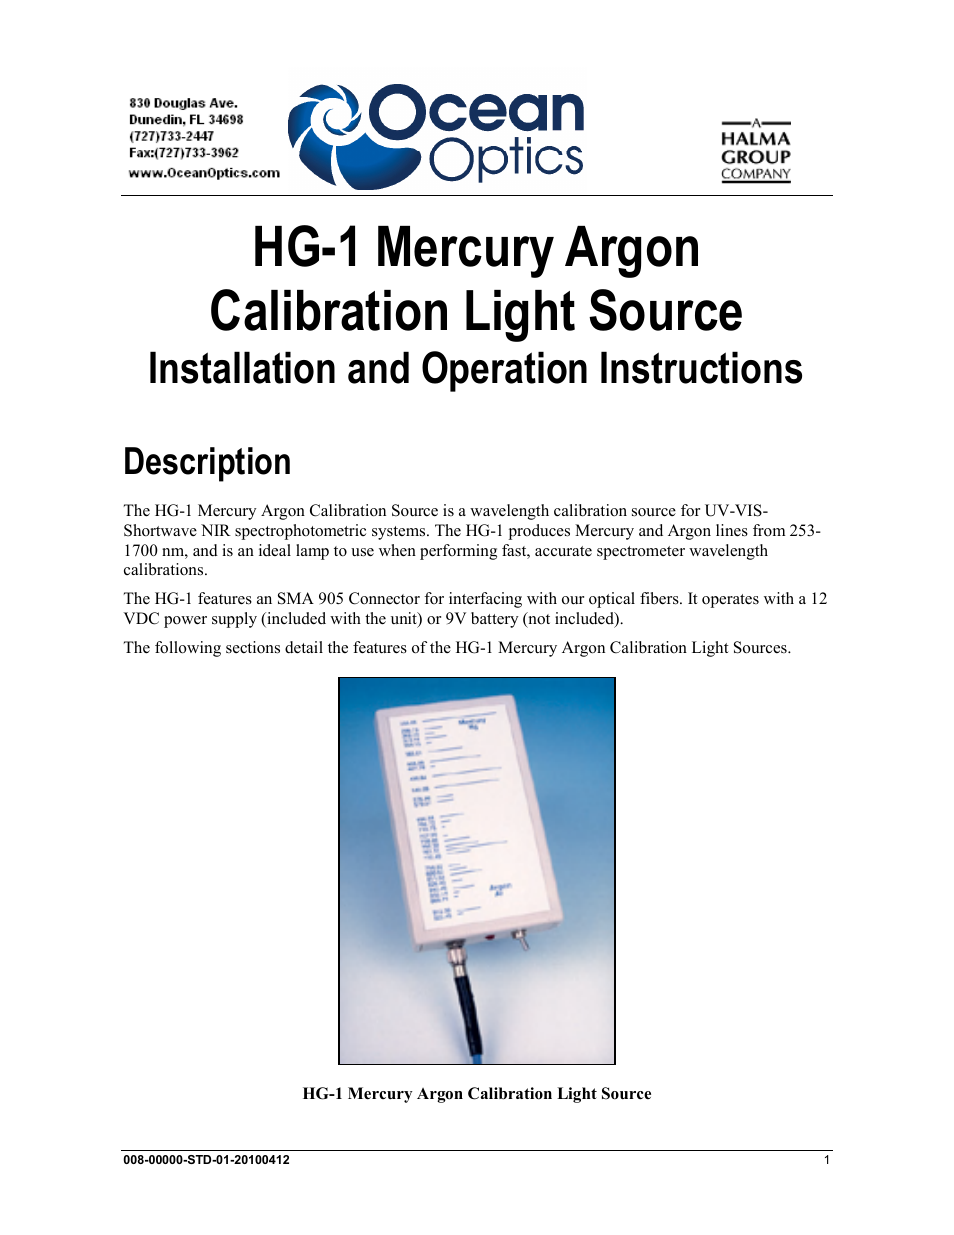 HG-1 Mercury Argon